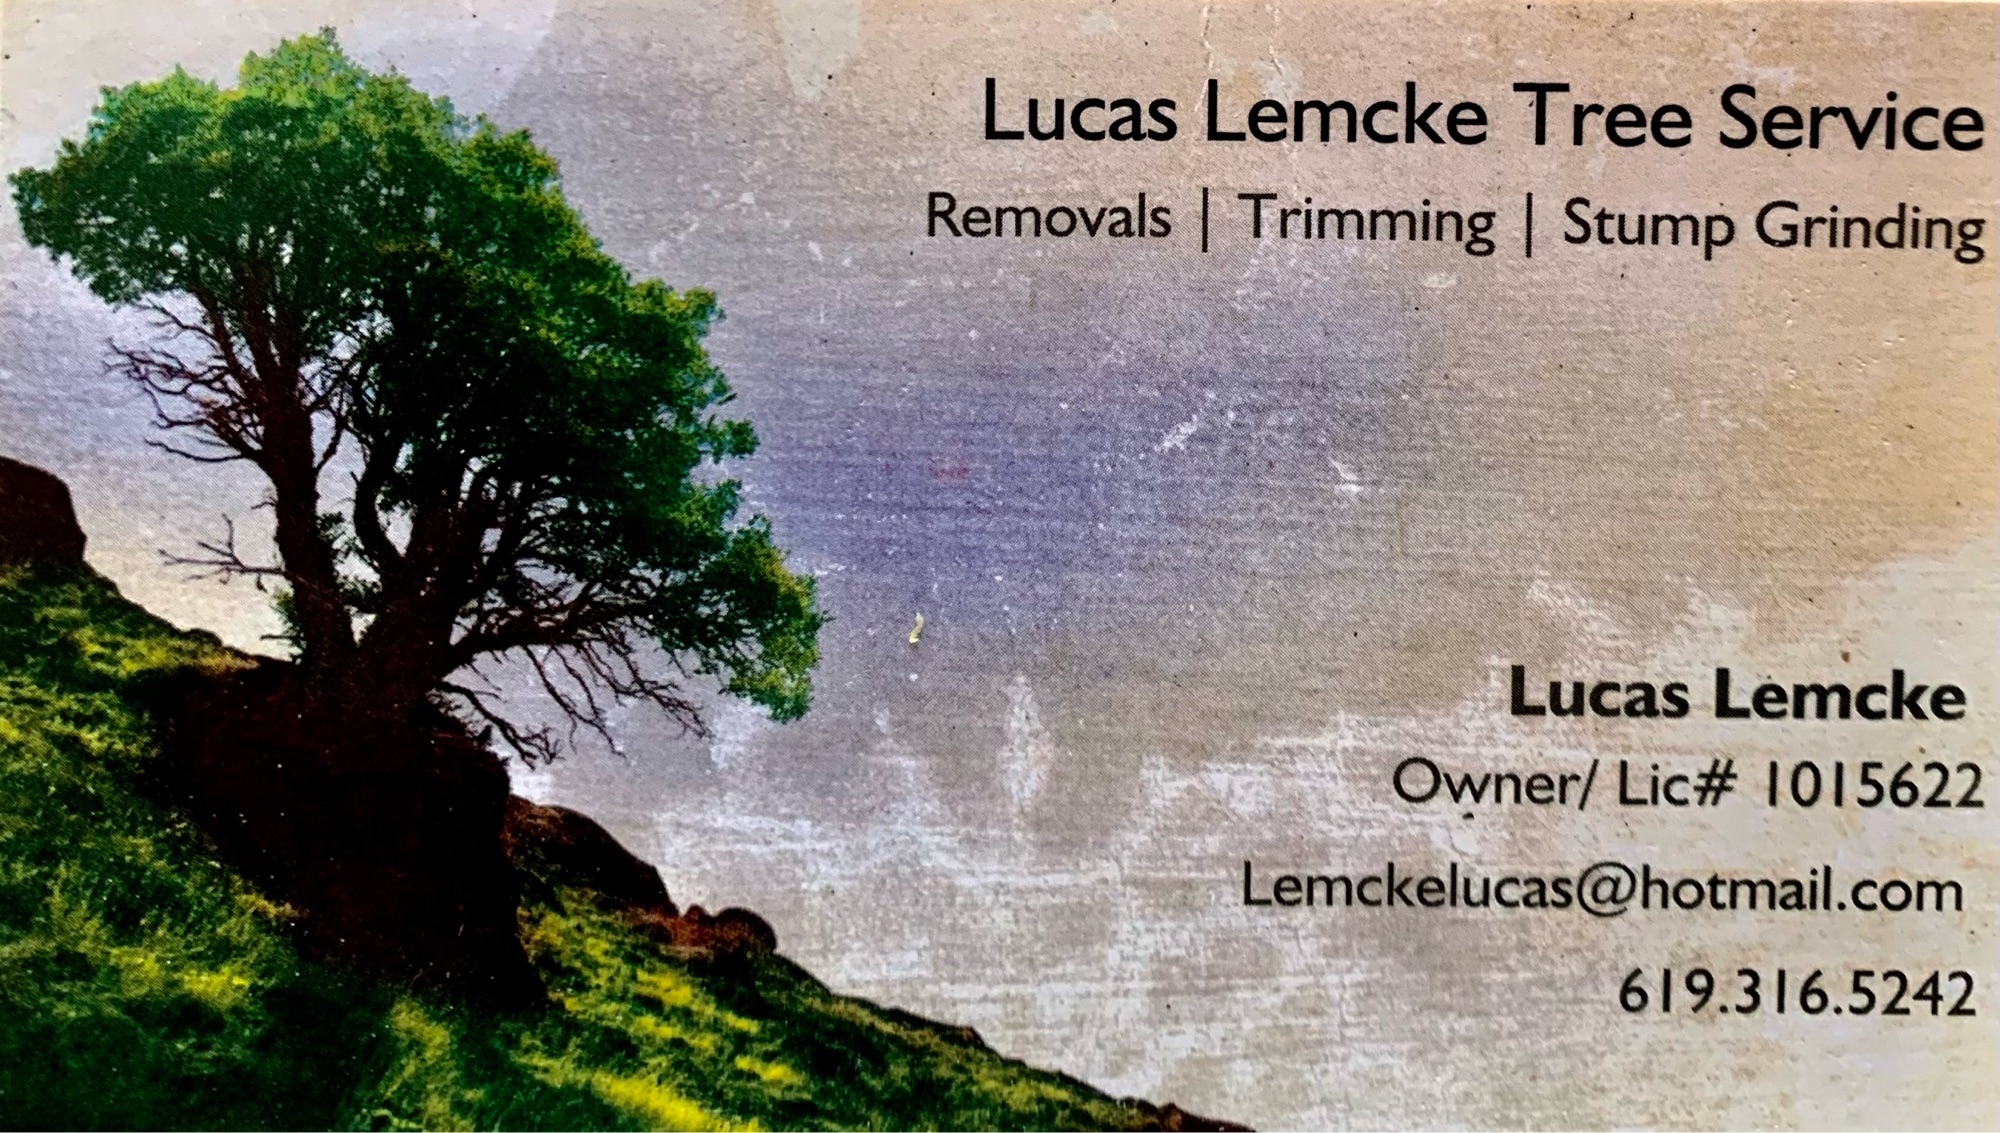 Lucas Lemcke Tree Service Logo